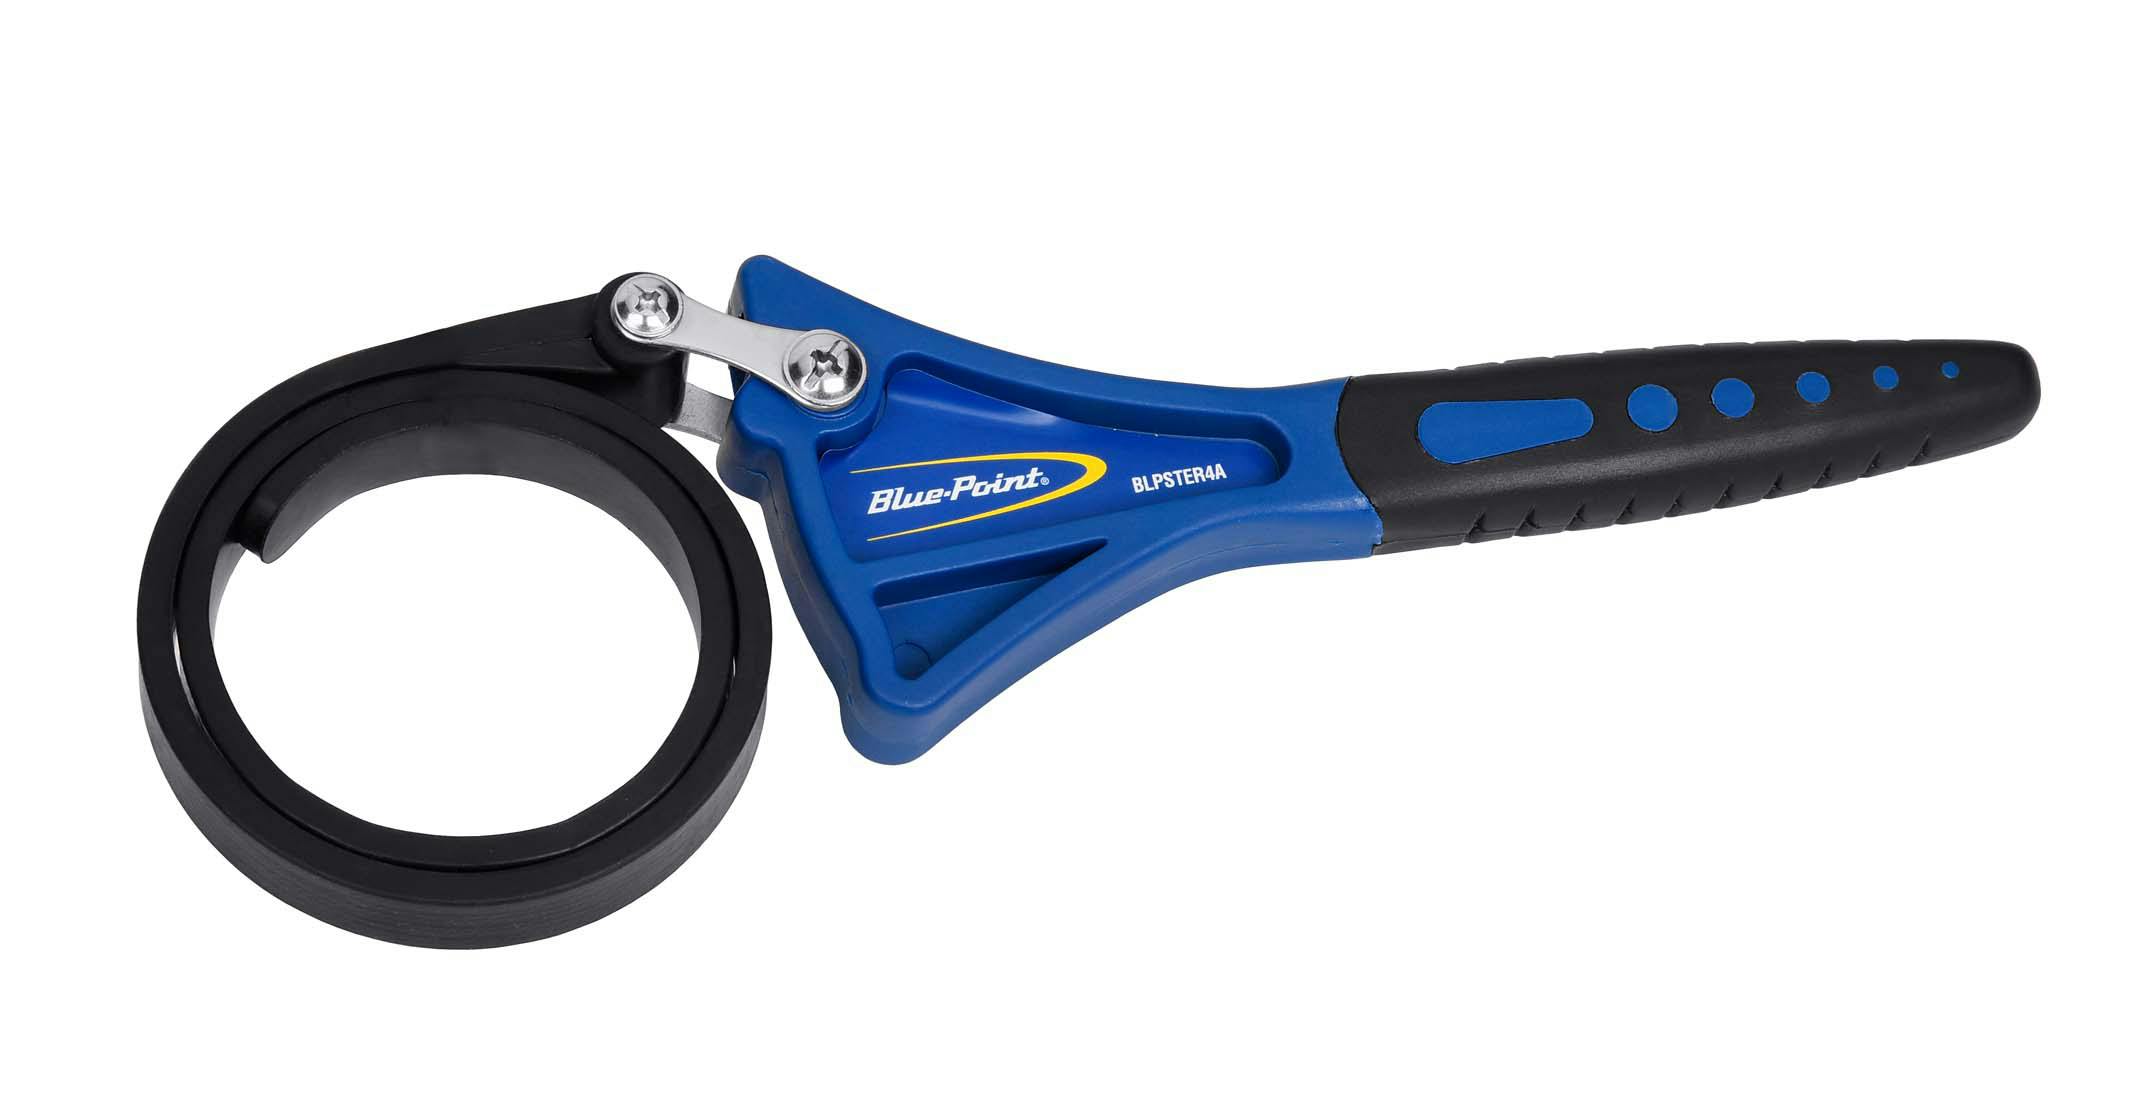 4 Strap Wrench (Blue-Point®), BLPSTWR4A